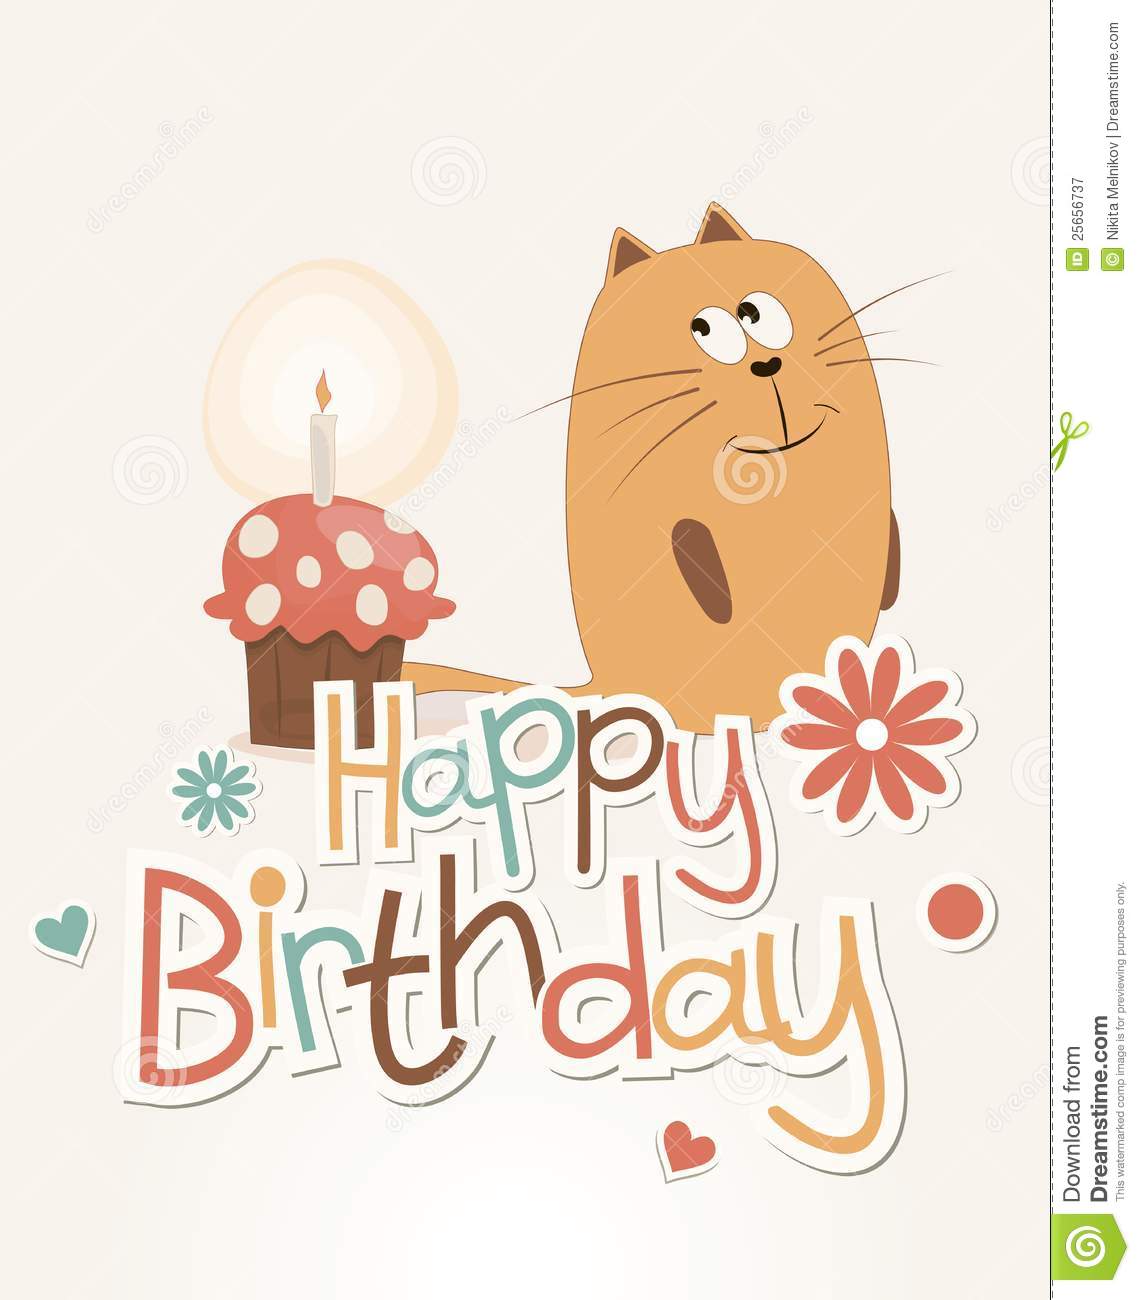 Free download Cute Happy Birthday Card Image Wallpaper happy ...